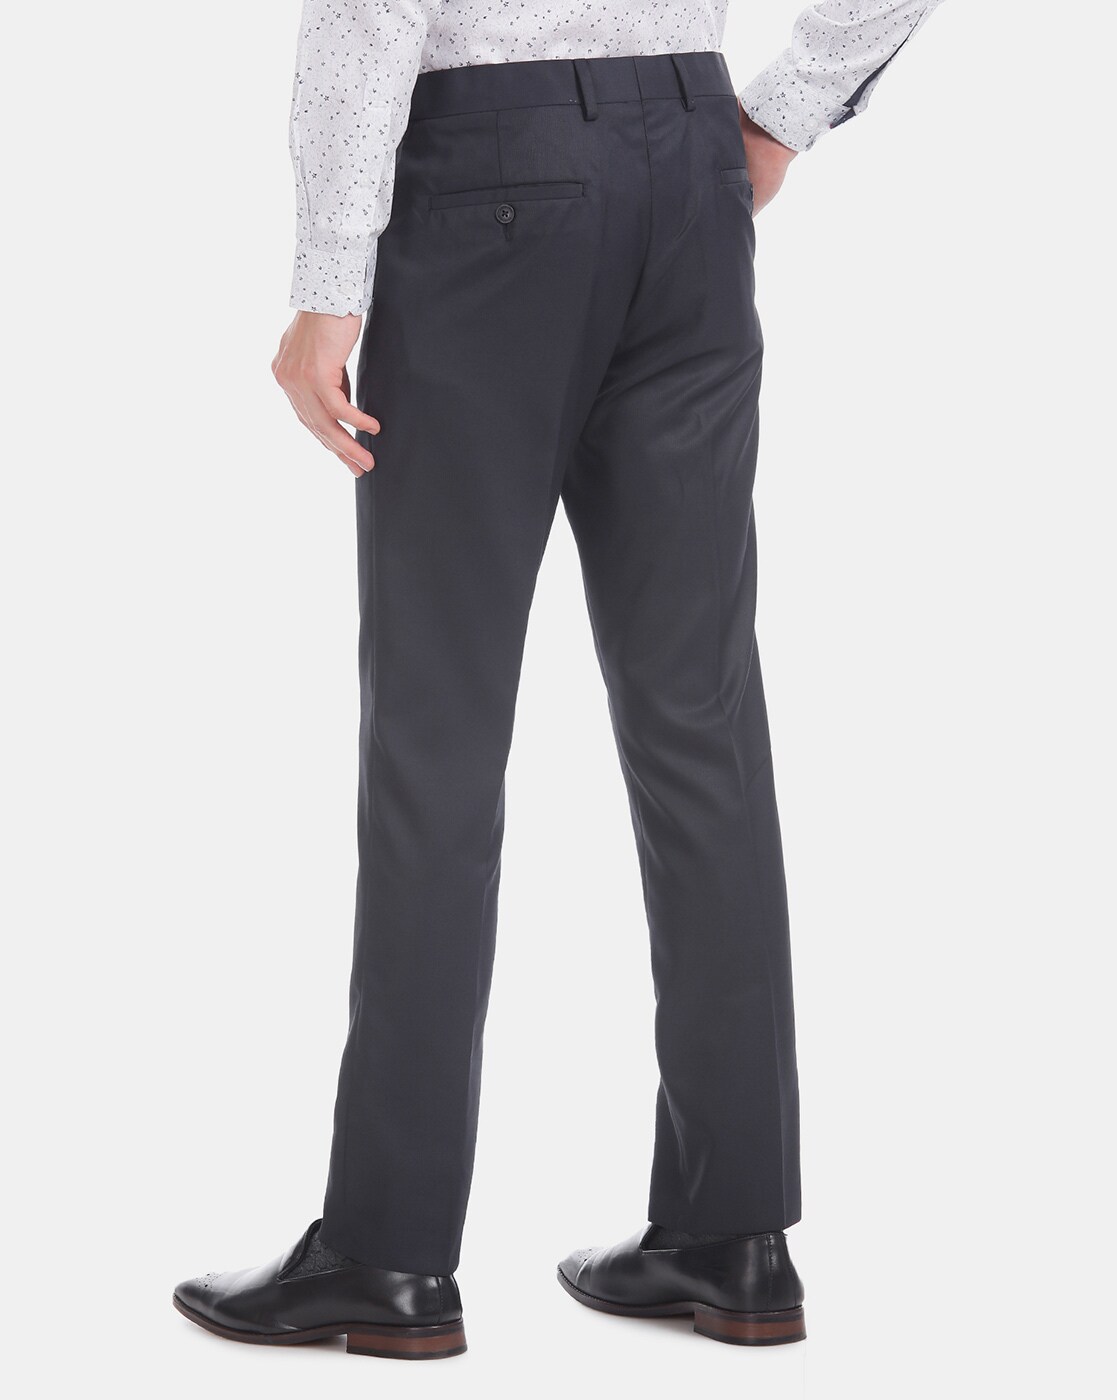 Excalibur Men's Skinny Fit Formal Trousers (EXTROMEZ0120002_39_Black_38W x  28L) : Amazon.in: Fashion